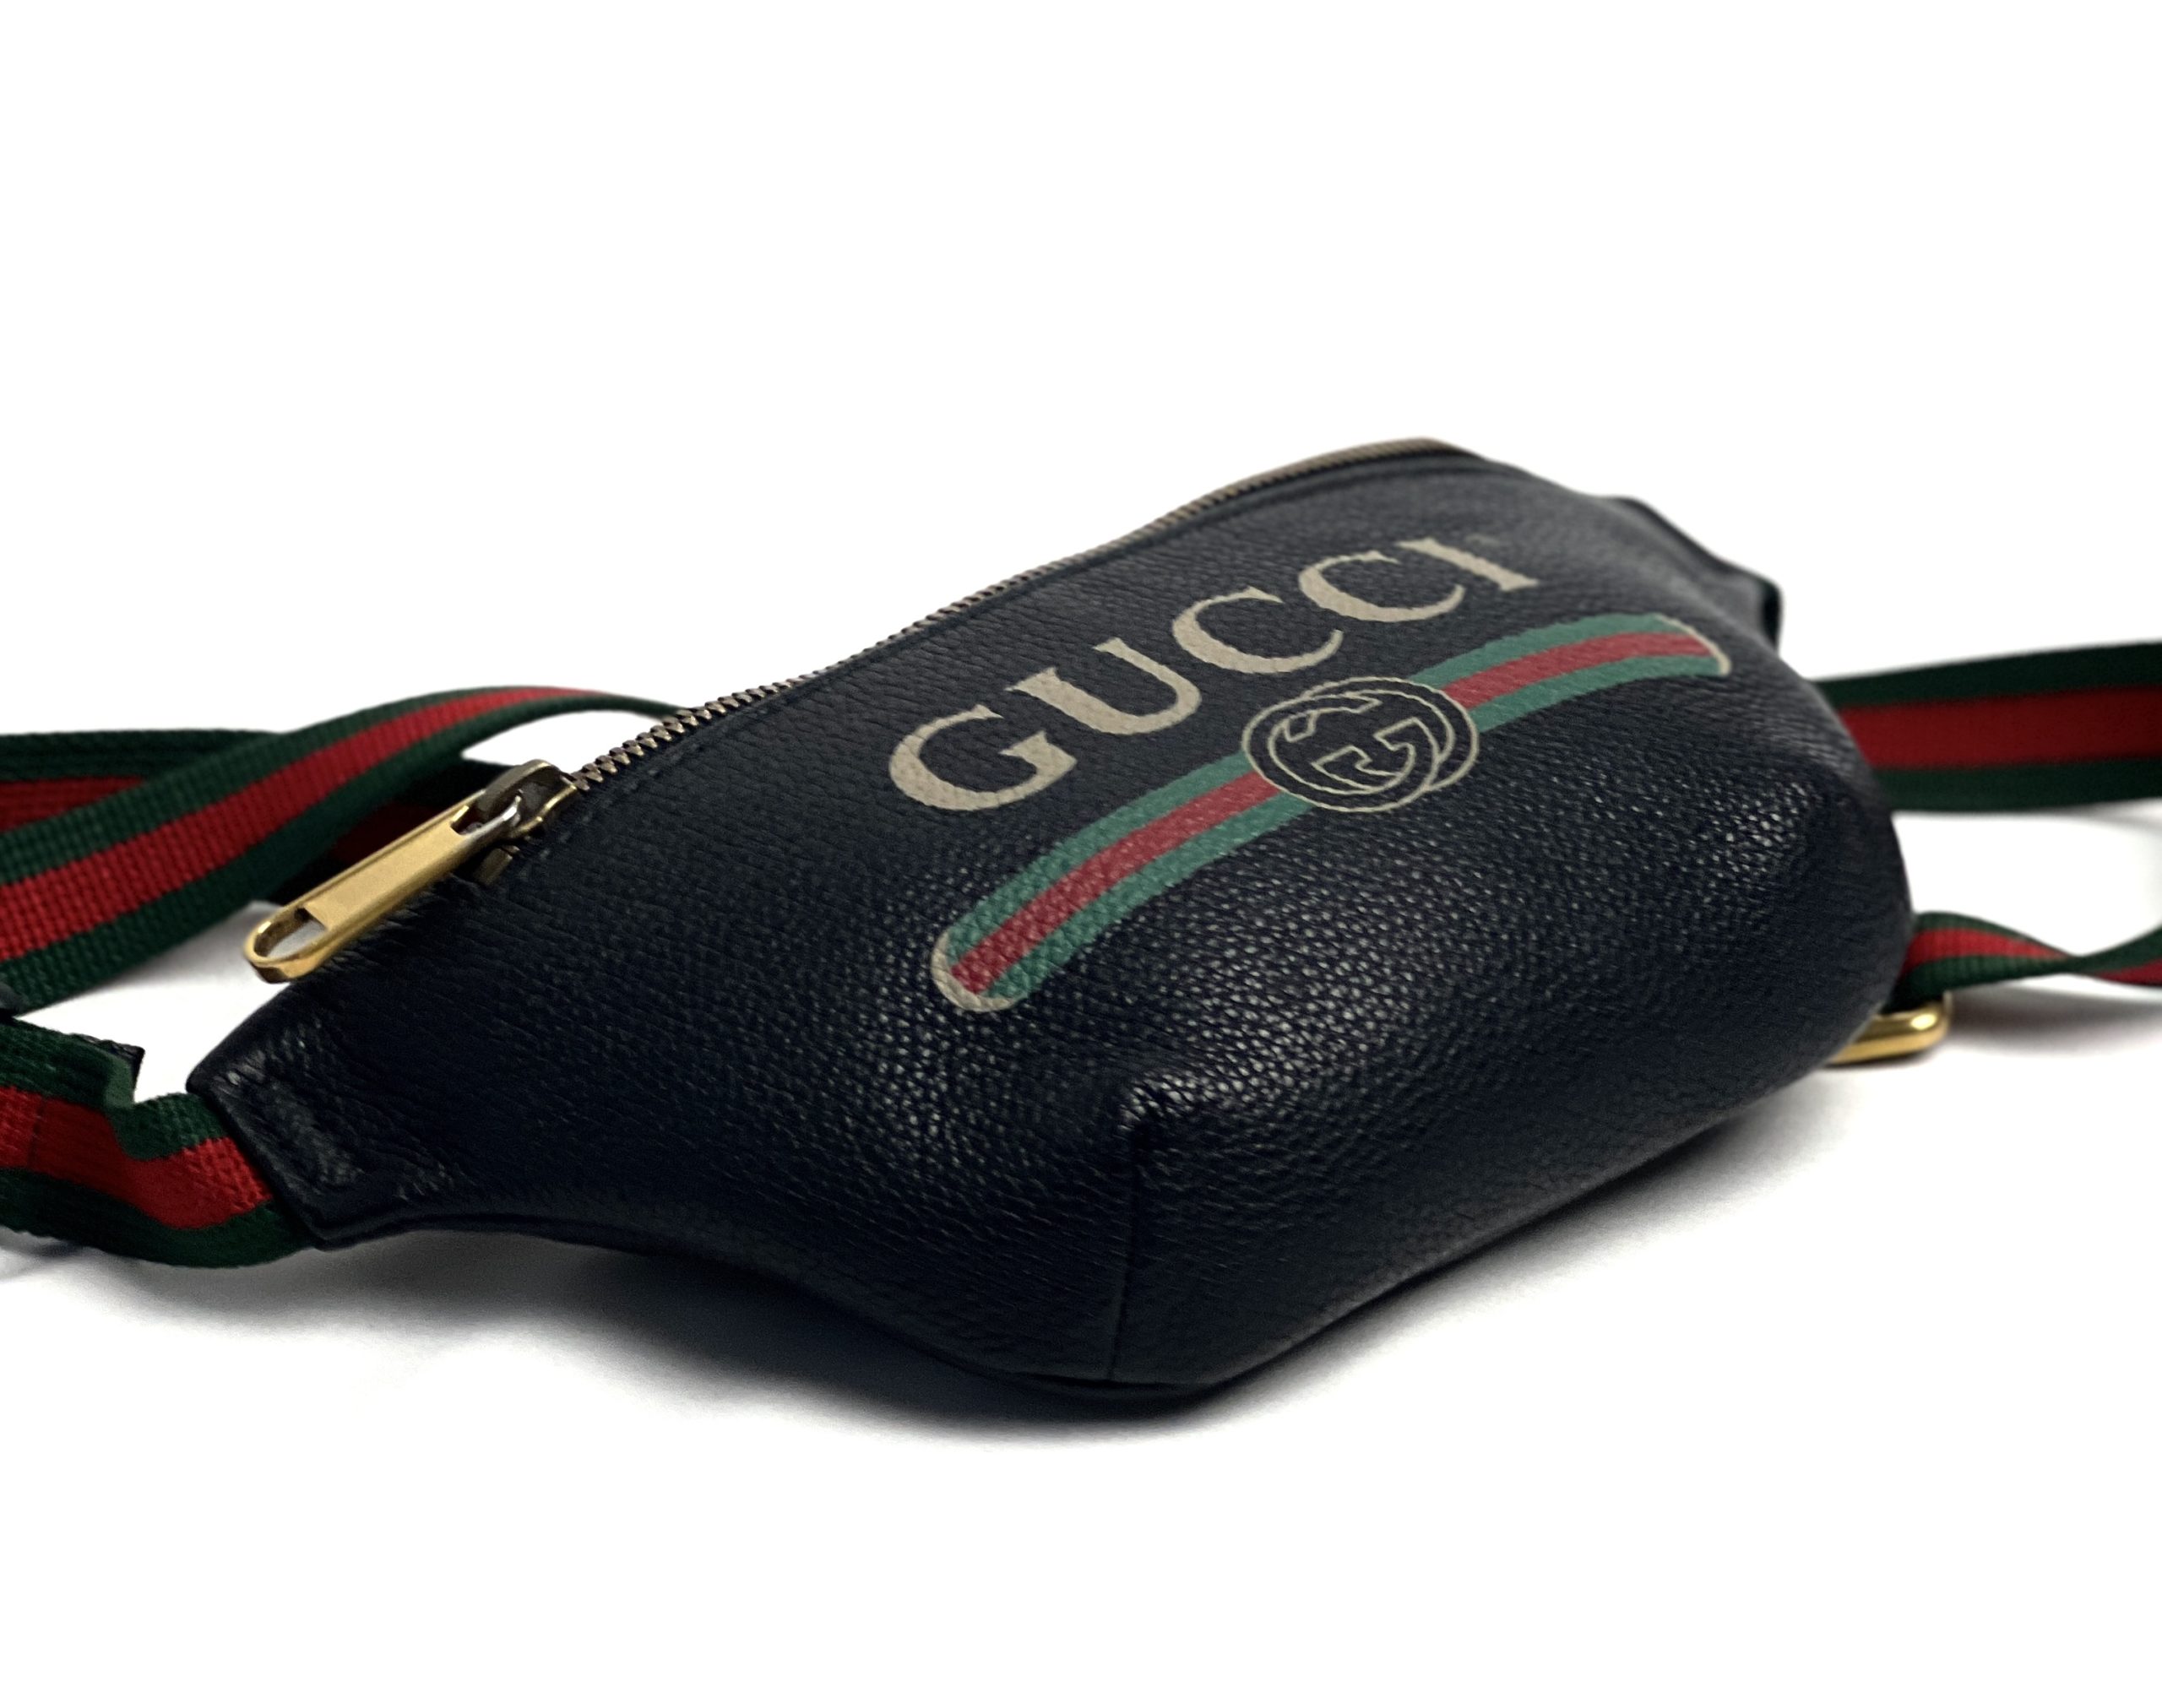 Gucci Original Gg Canvas Belt Bag in Natural